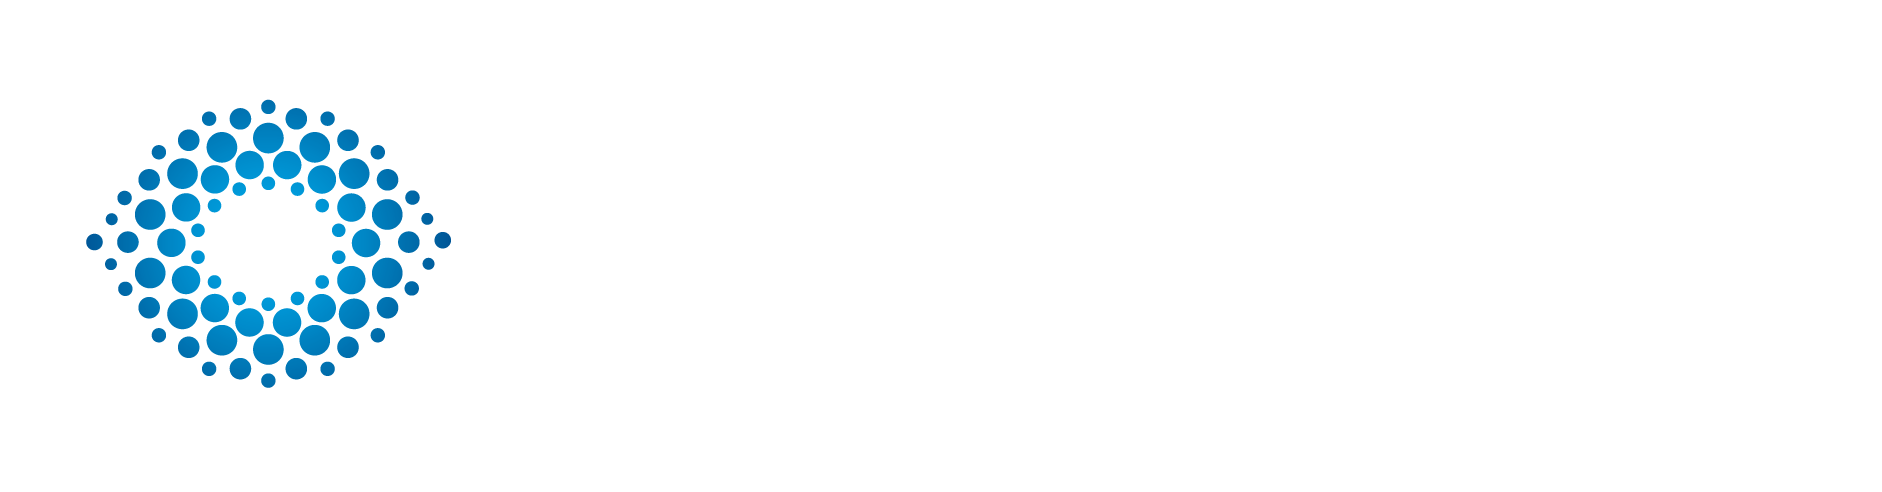 Insight Planning